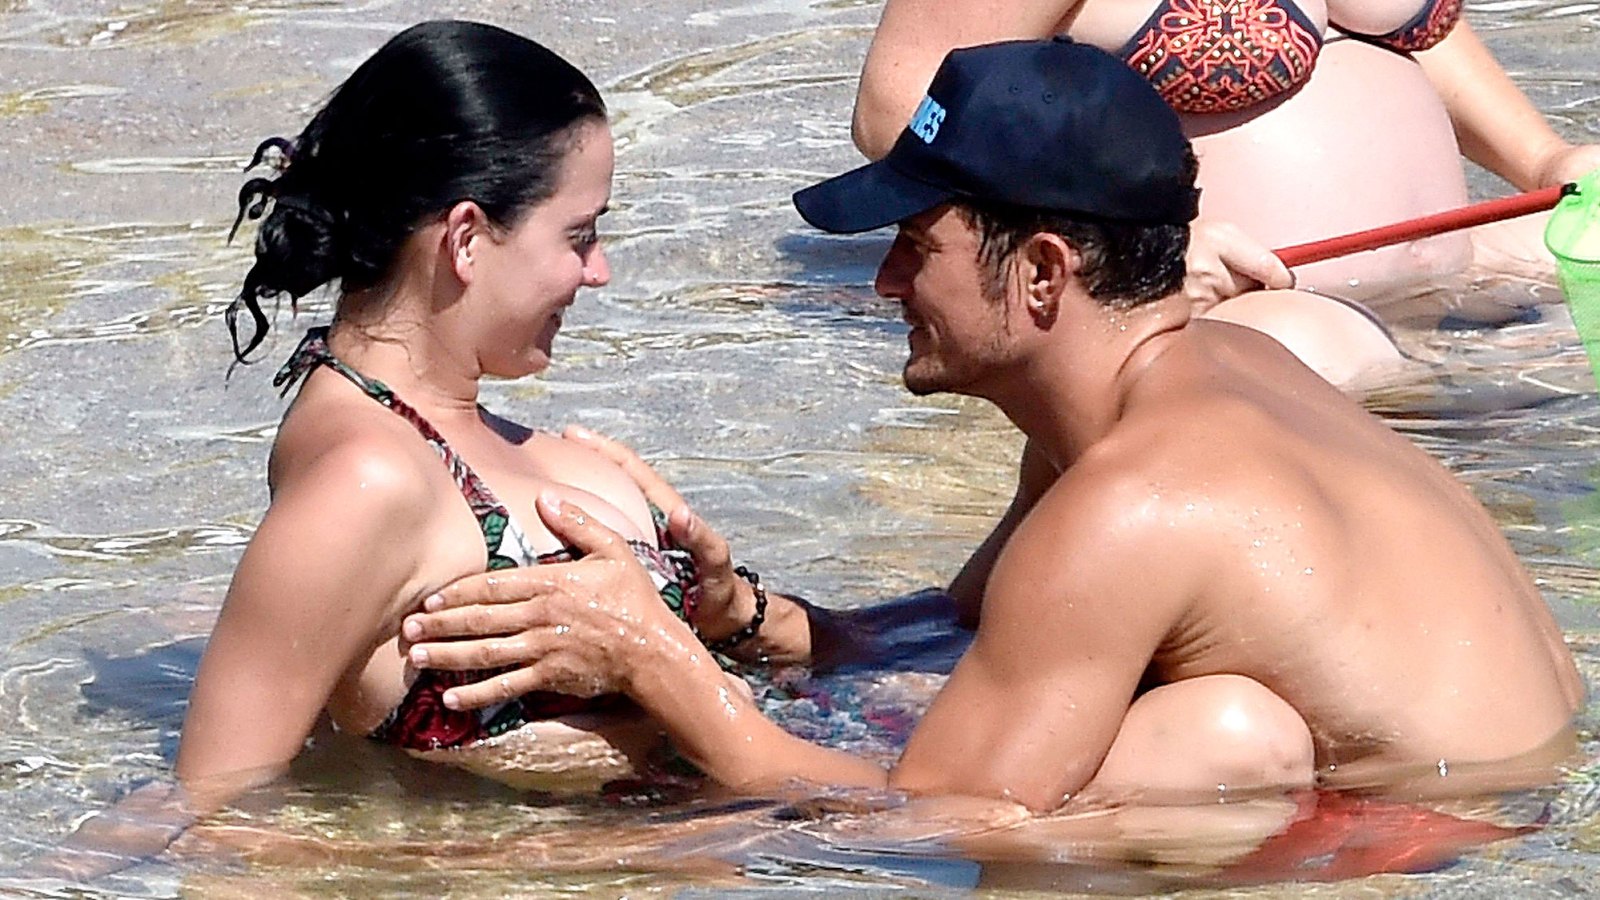 Big Boob Nude Katy Perry - Orlando Bloom Grabs Katy Perry's Boobs During Beach Vacation